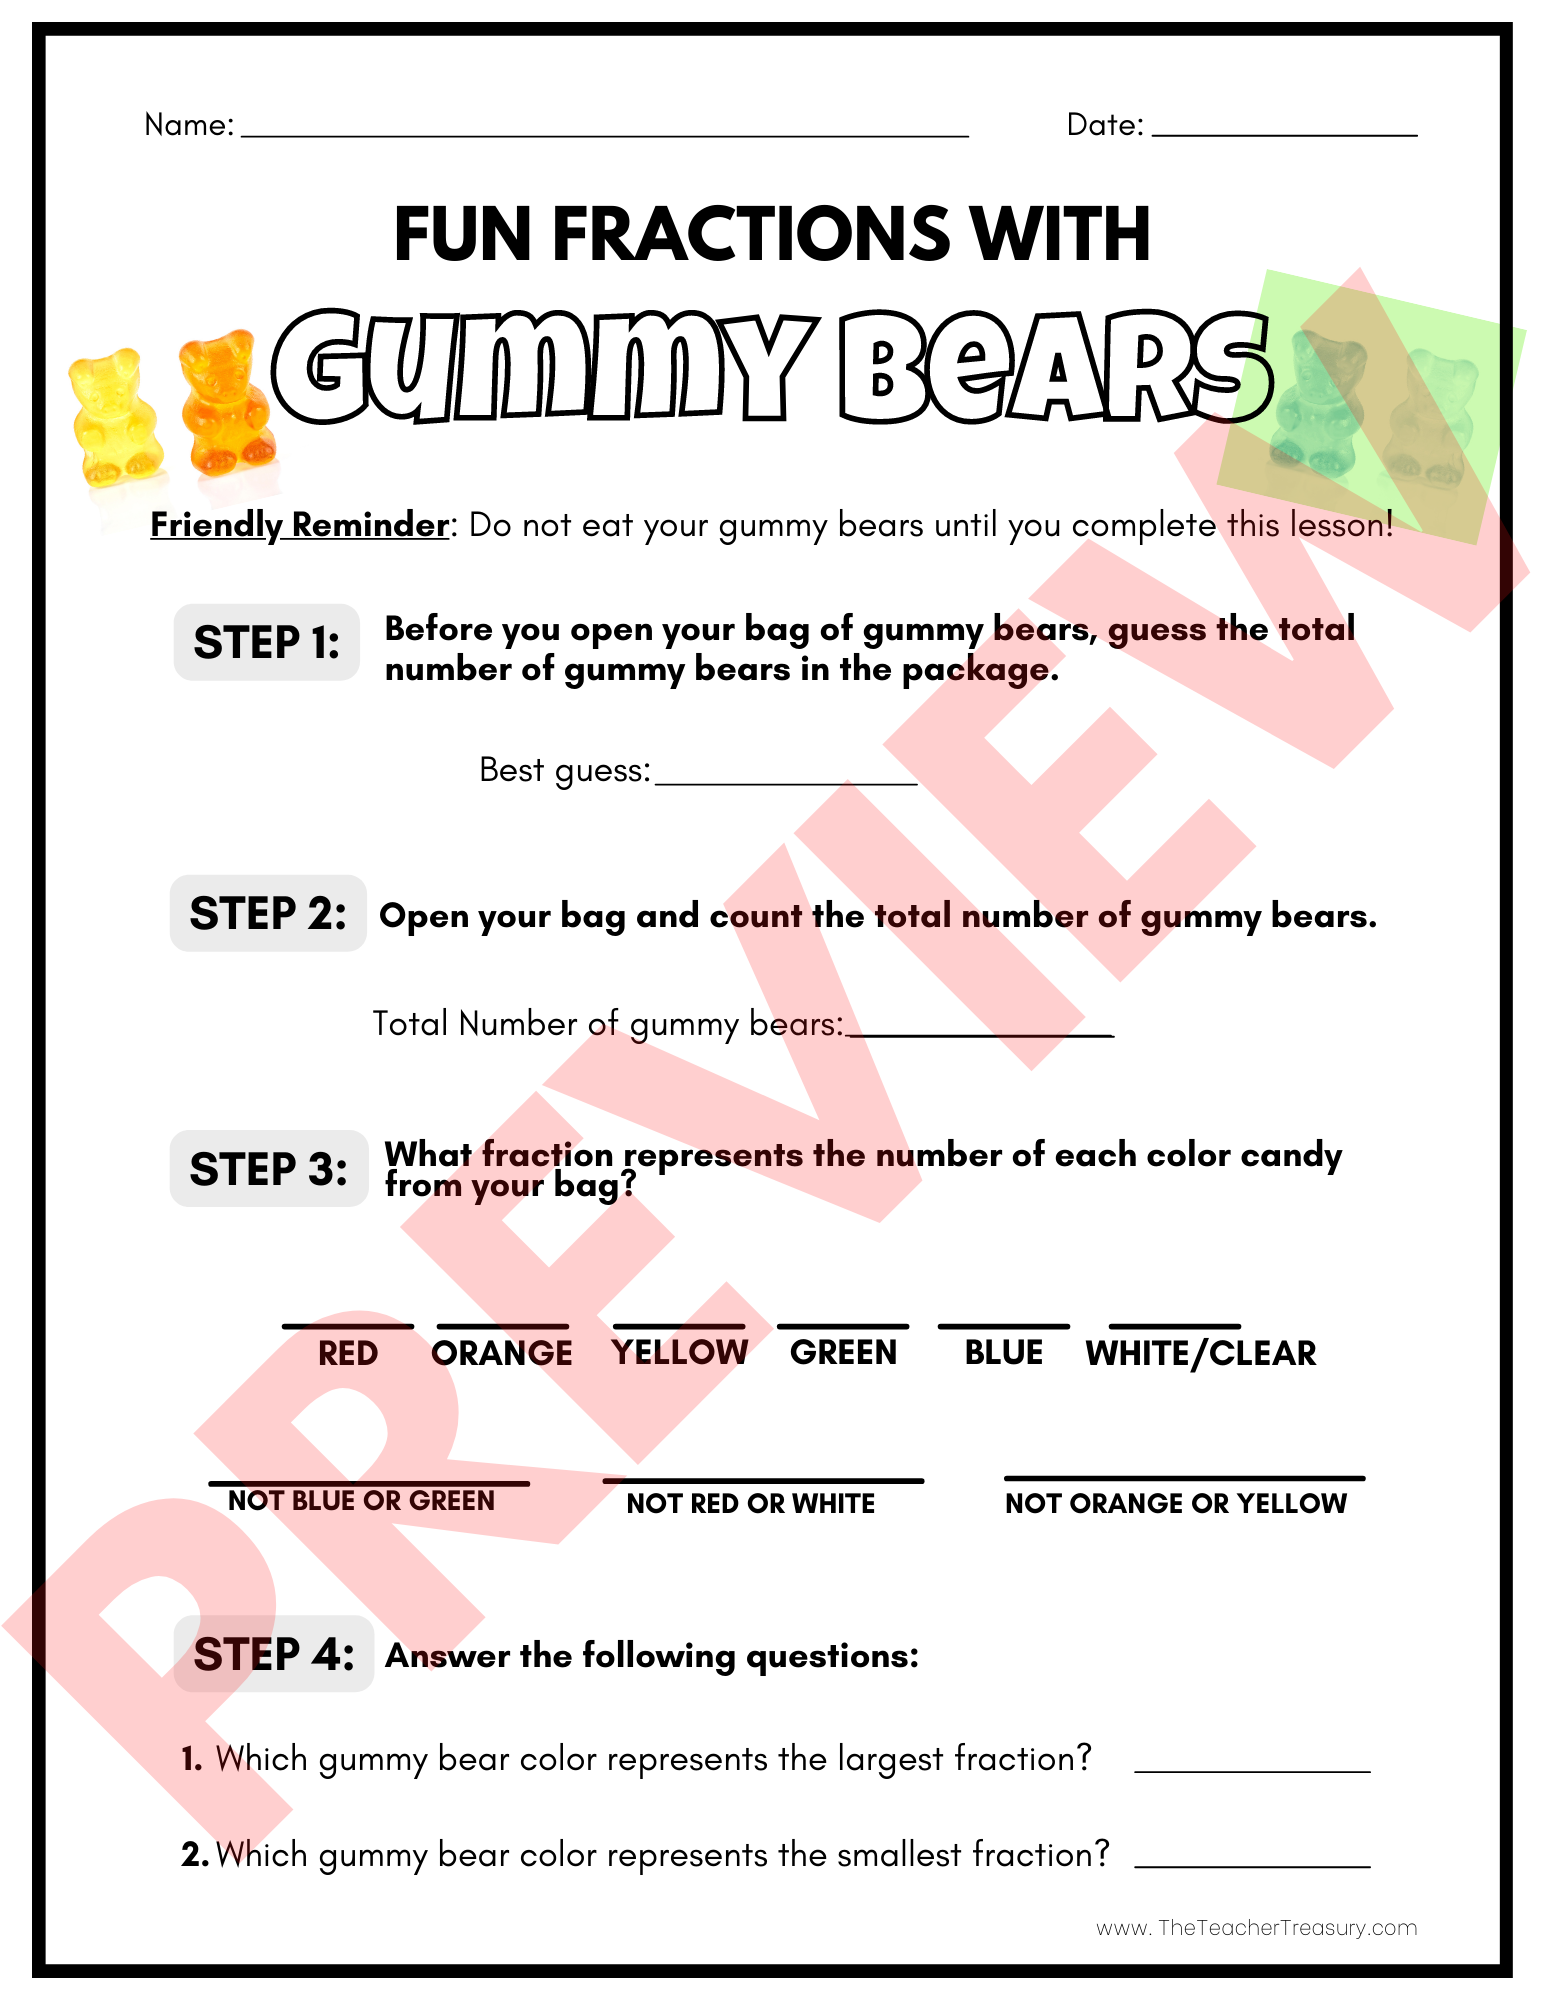 Gummy bear lesson